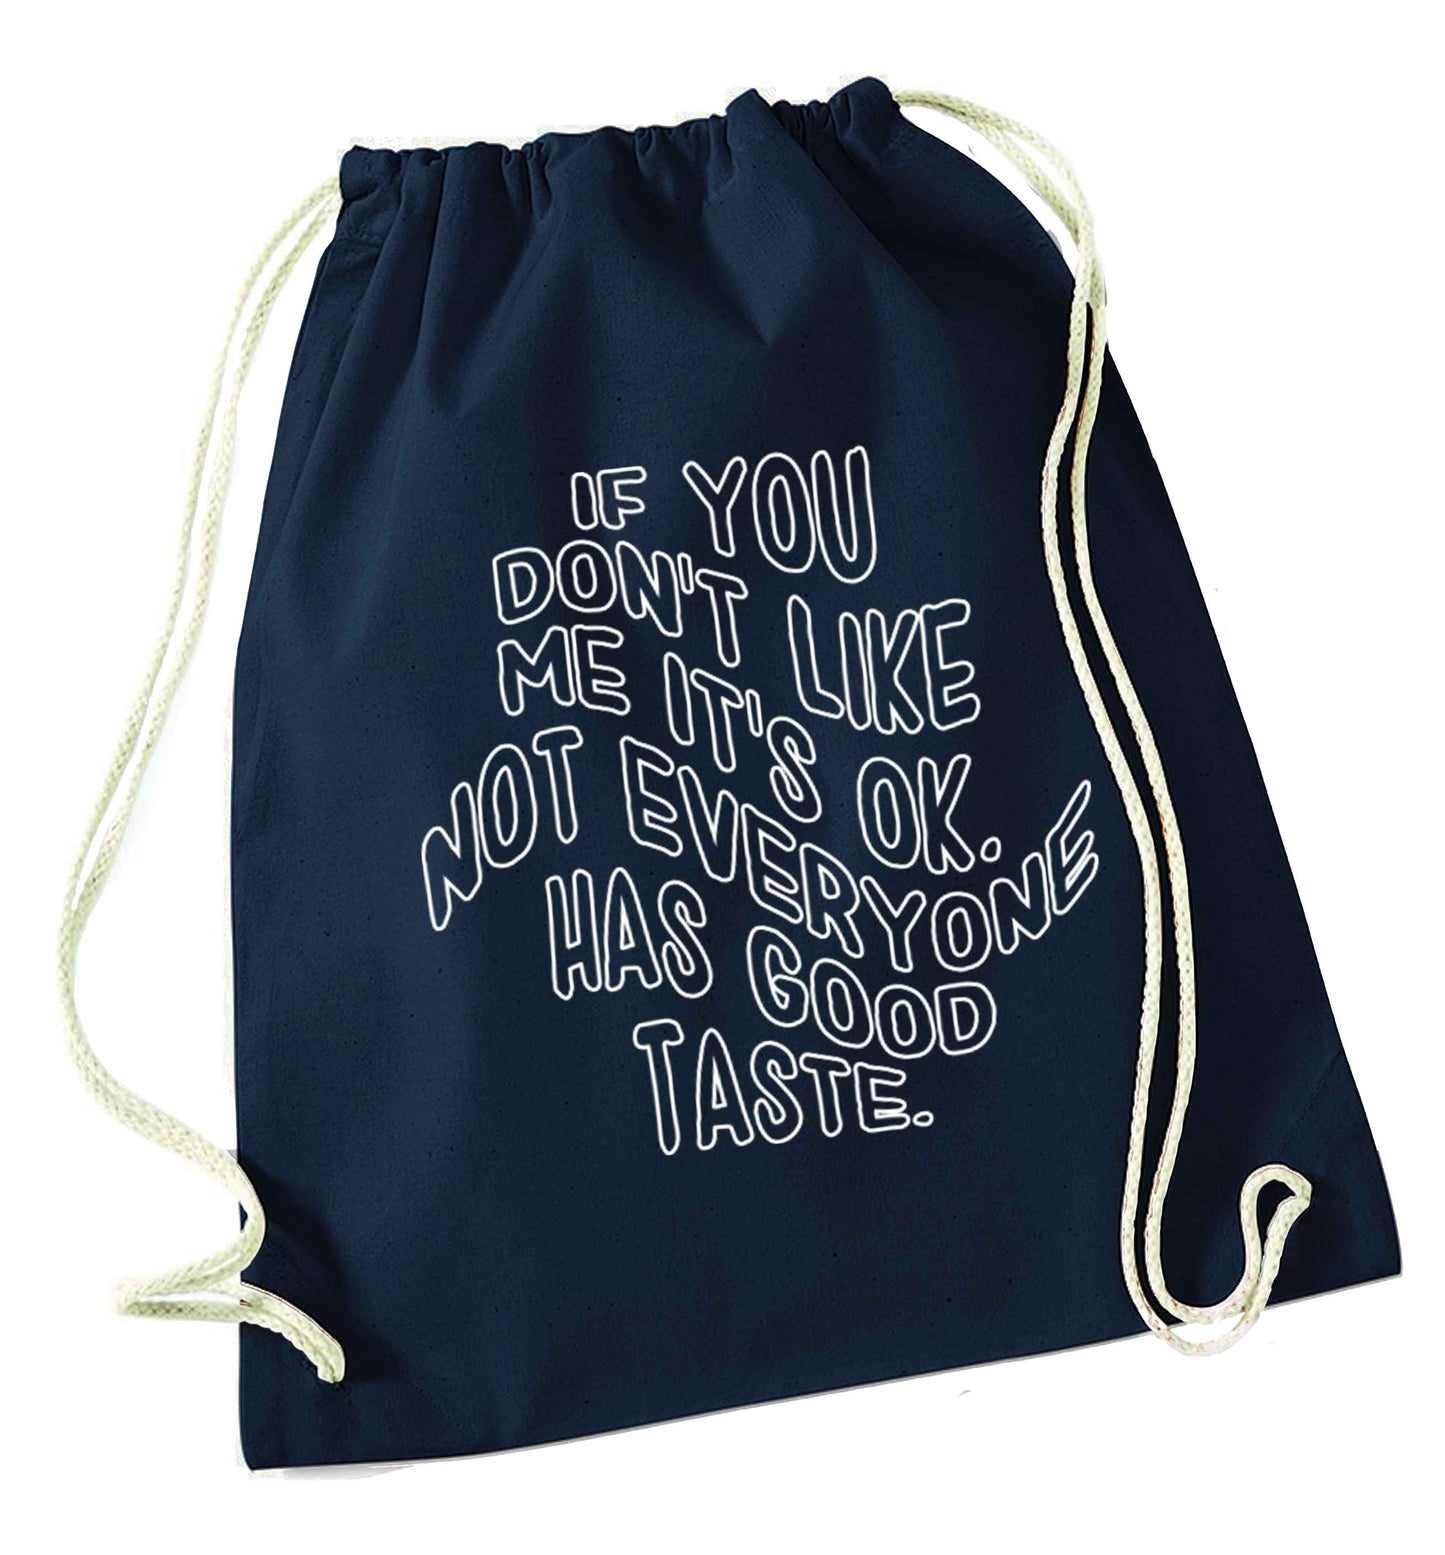 If you don't like me it's ok not everyone has good taste navy drawstring bag